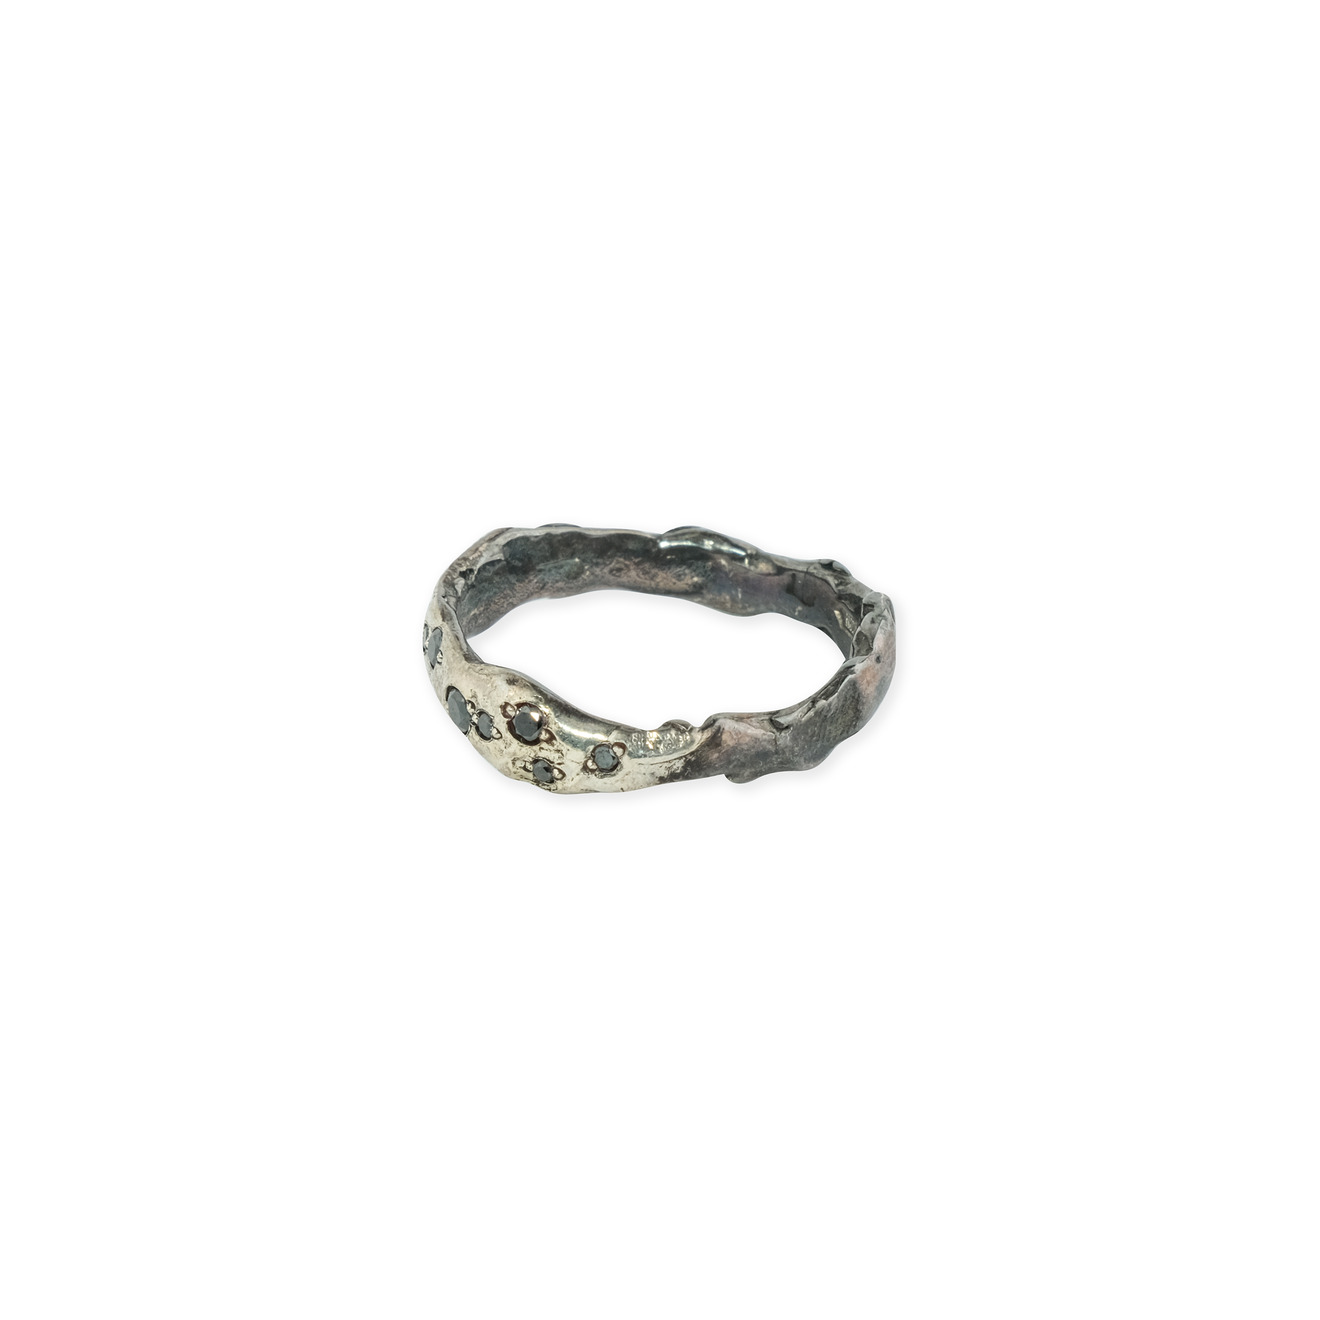 Kintsugi Jewelry Кольцо Brave из серебра с позолотой и бриллиантами кольцо с перидотами и фианитами из серебра с позолотой